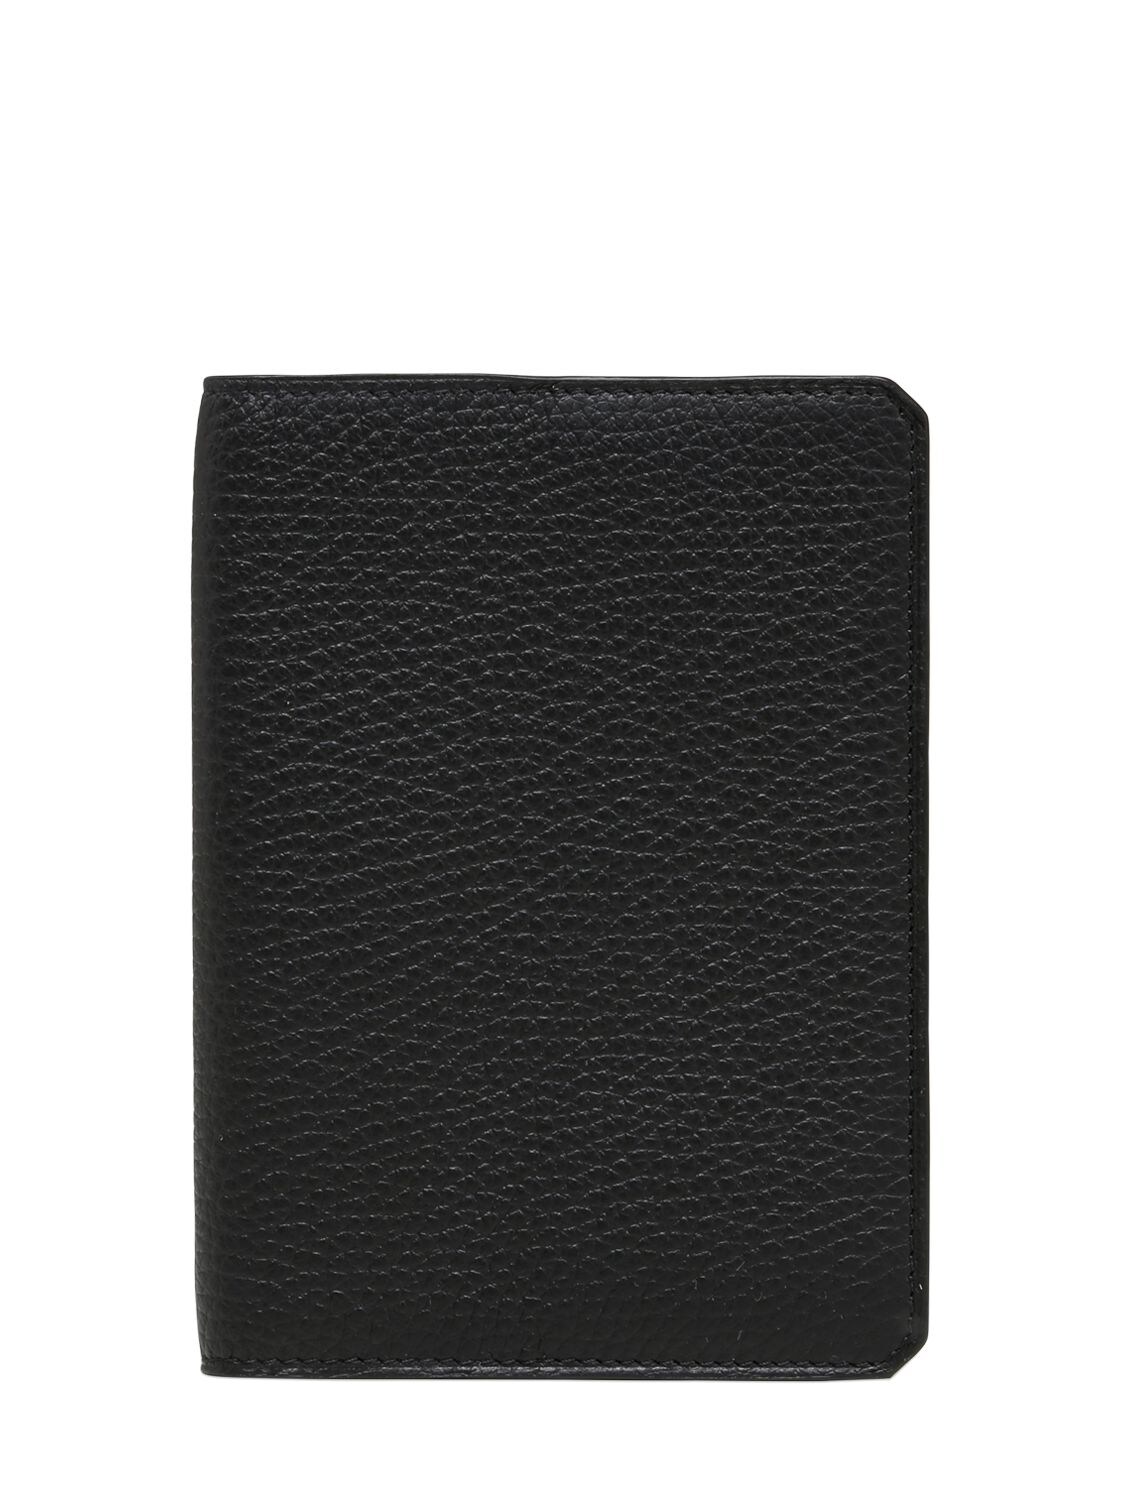 Aizea Soft Leather Passport Holder In Black